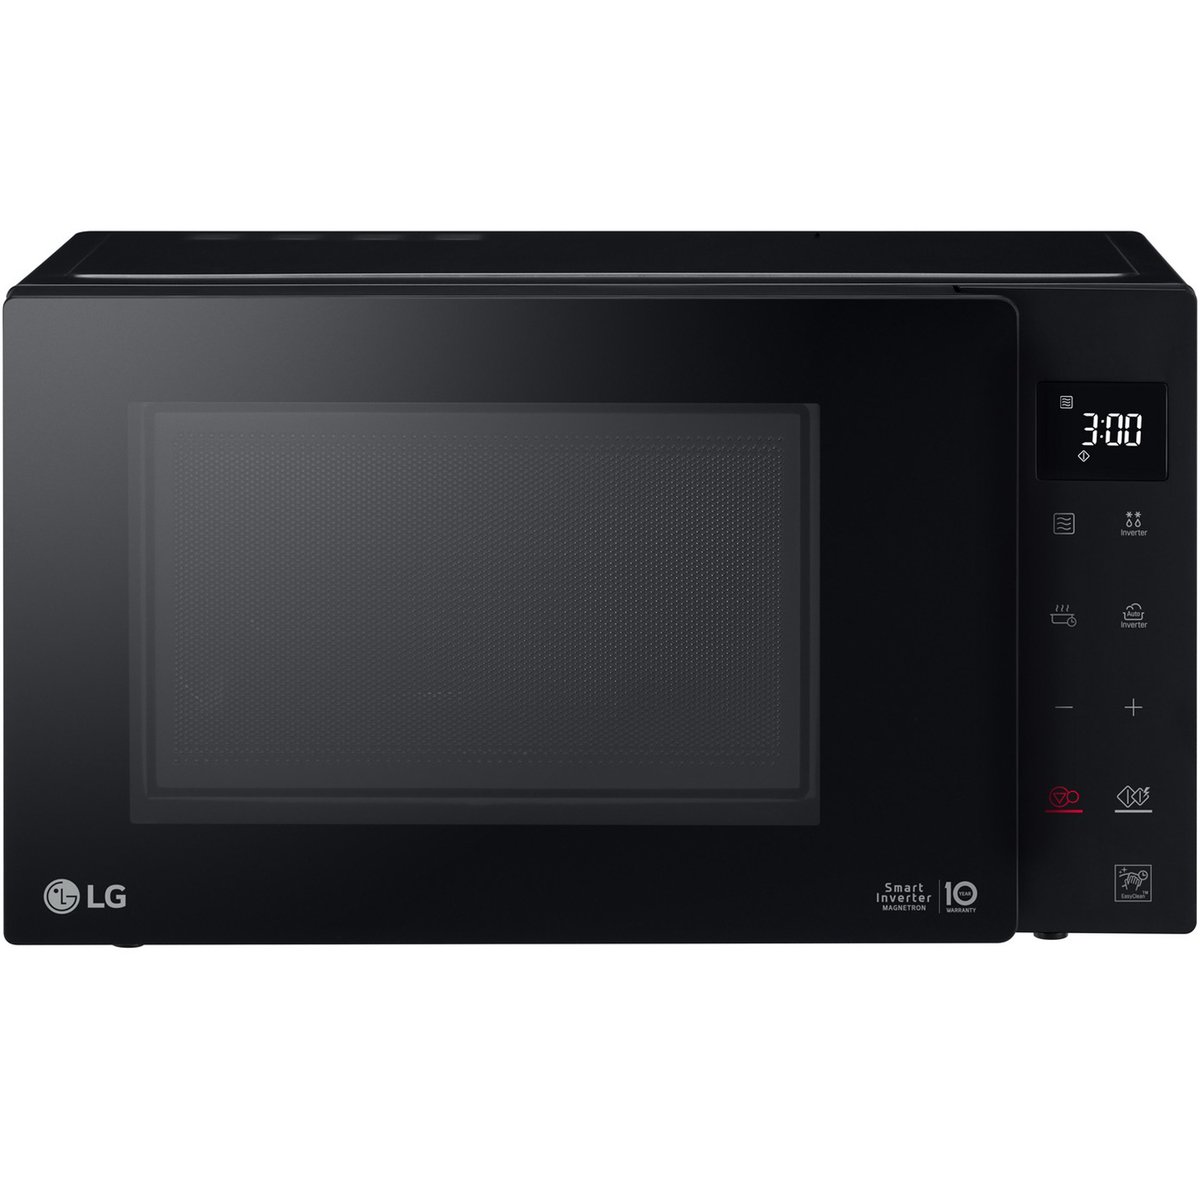 LG Microwave Oven MH6336GIB 23Ltr